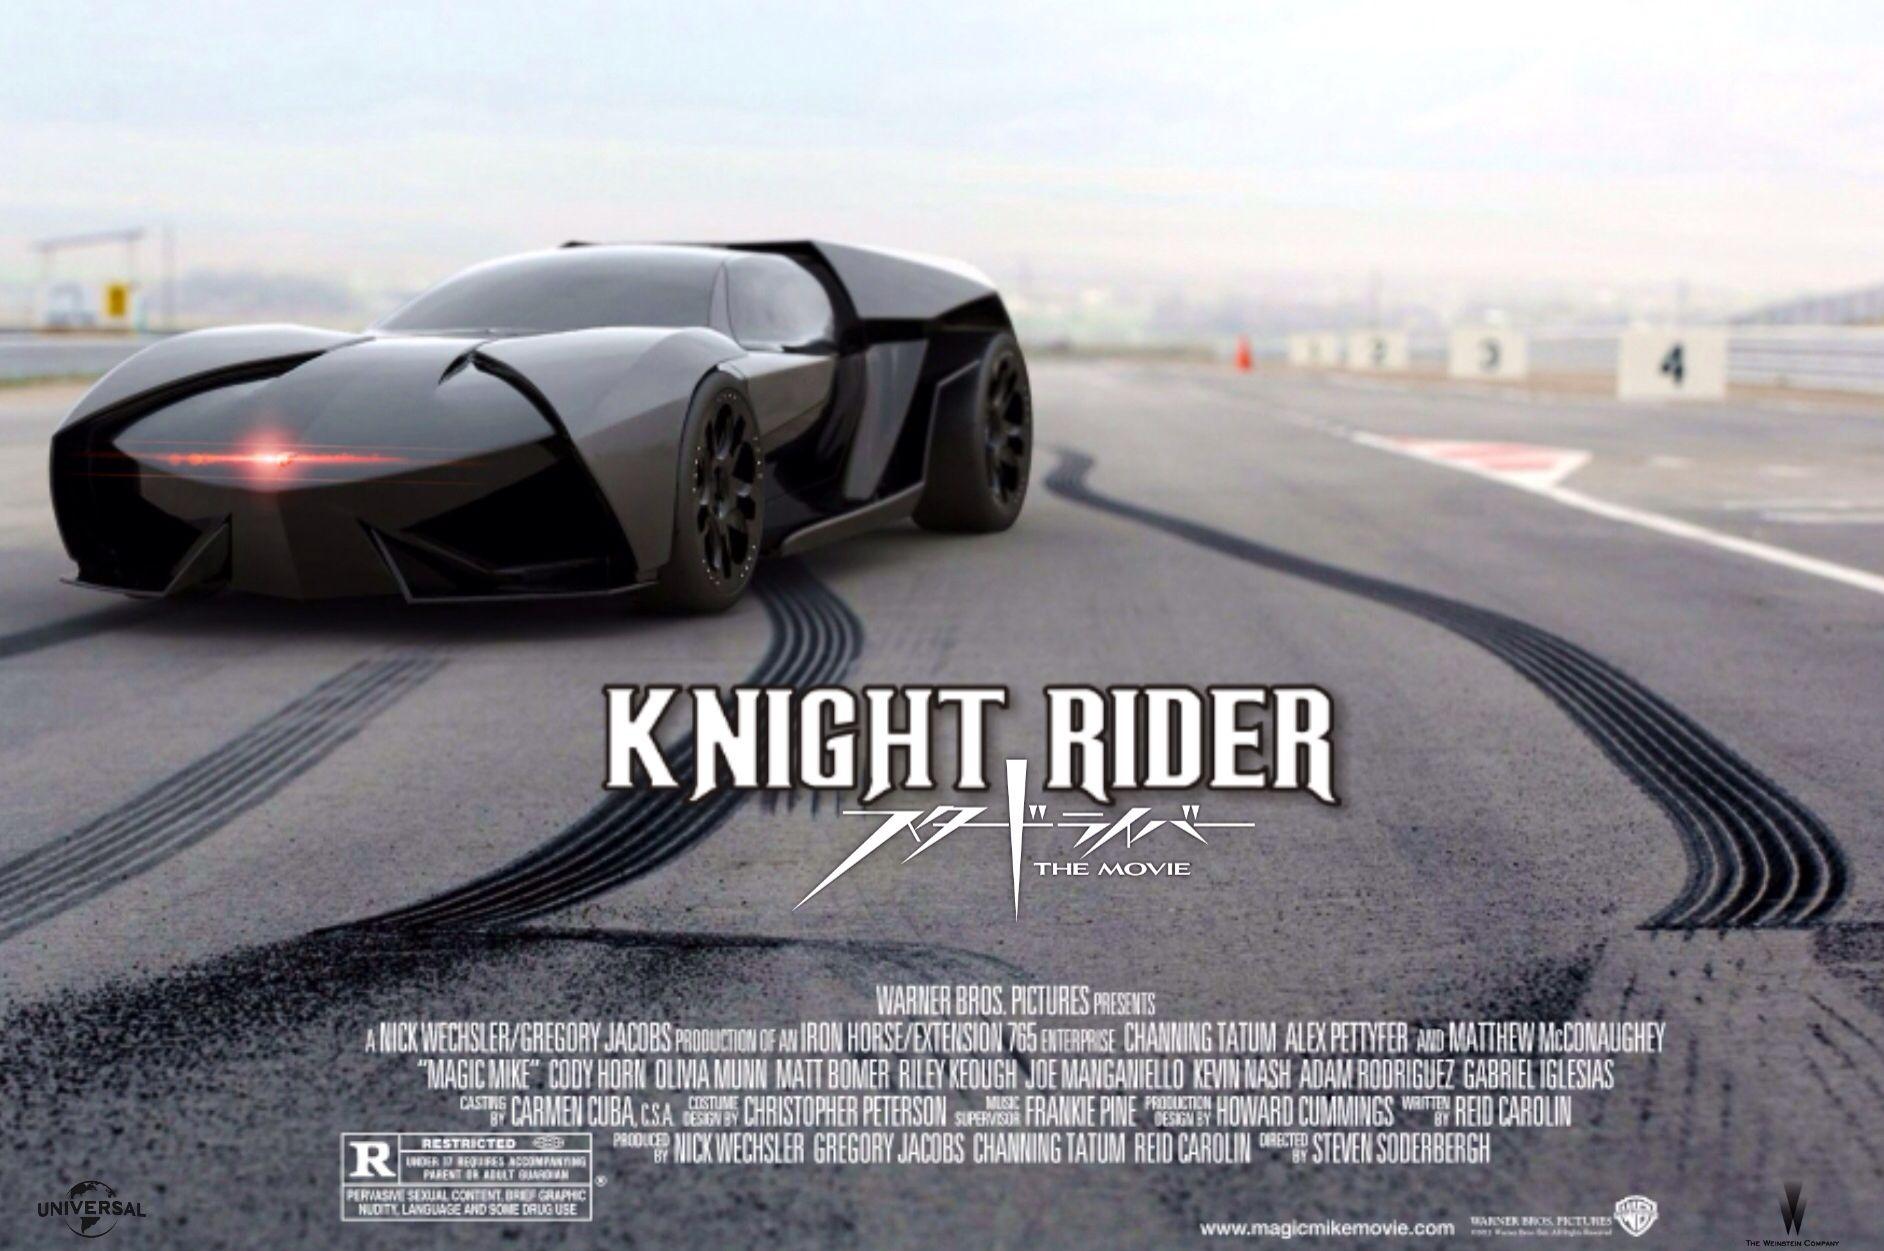 Knight Rider. knight rider. Knight, Movie cars and Cars